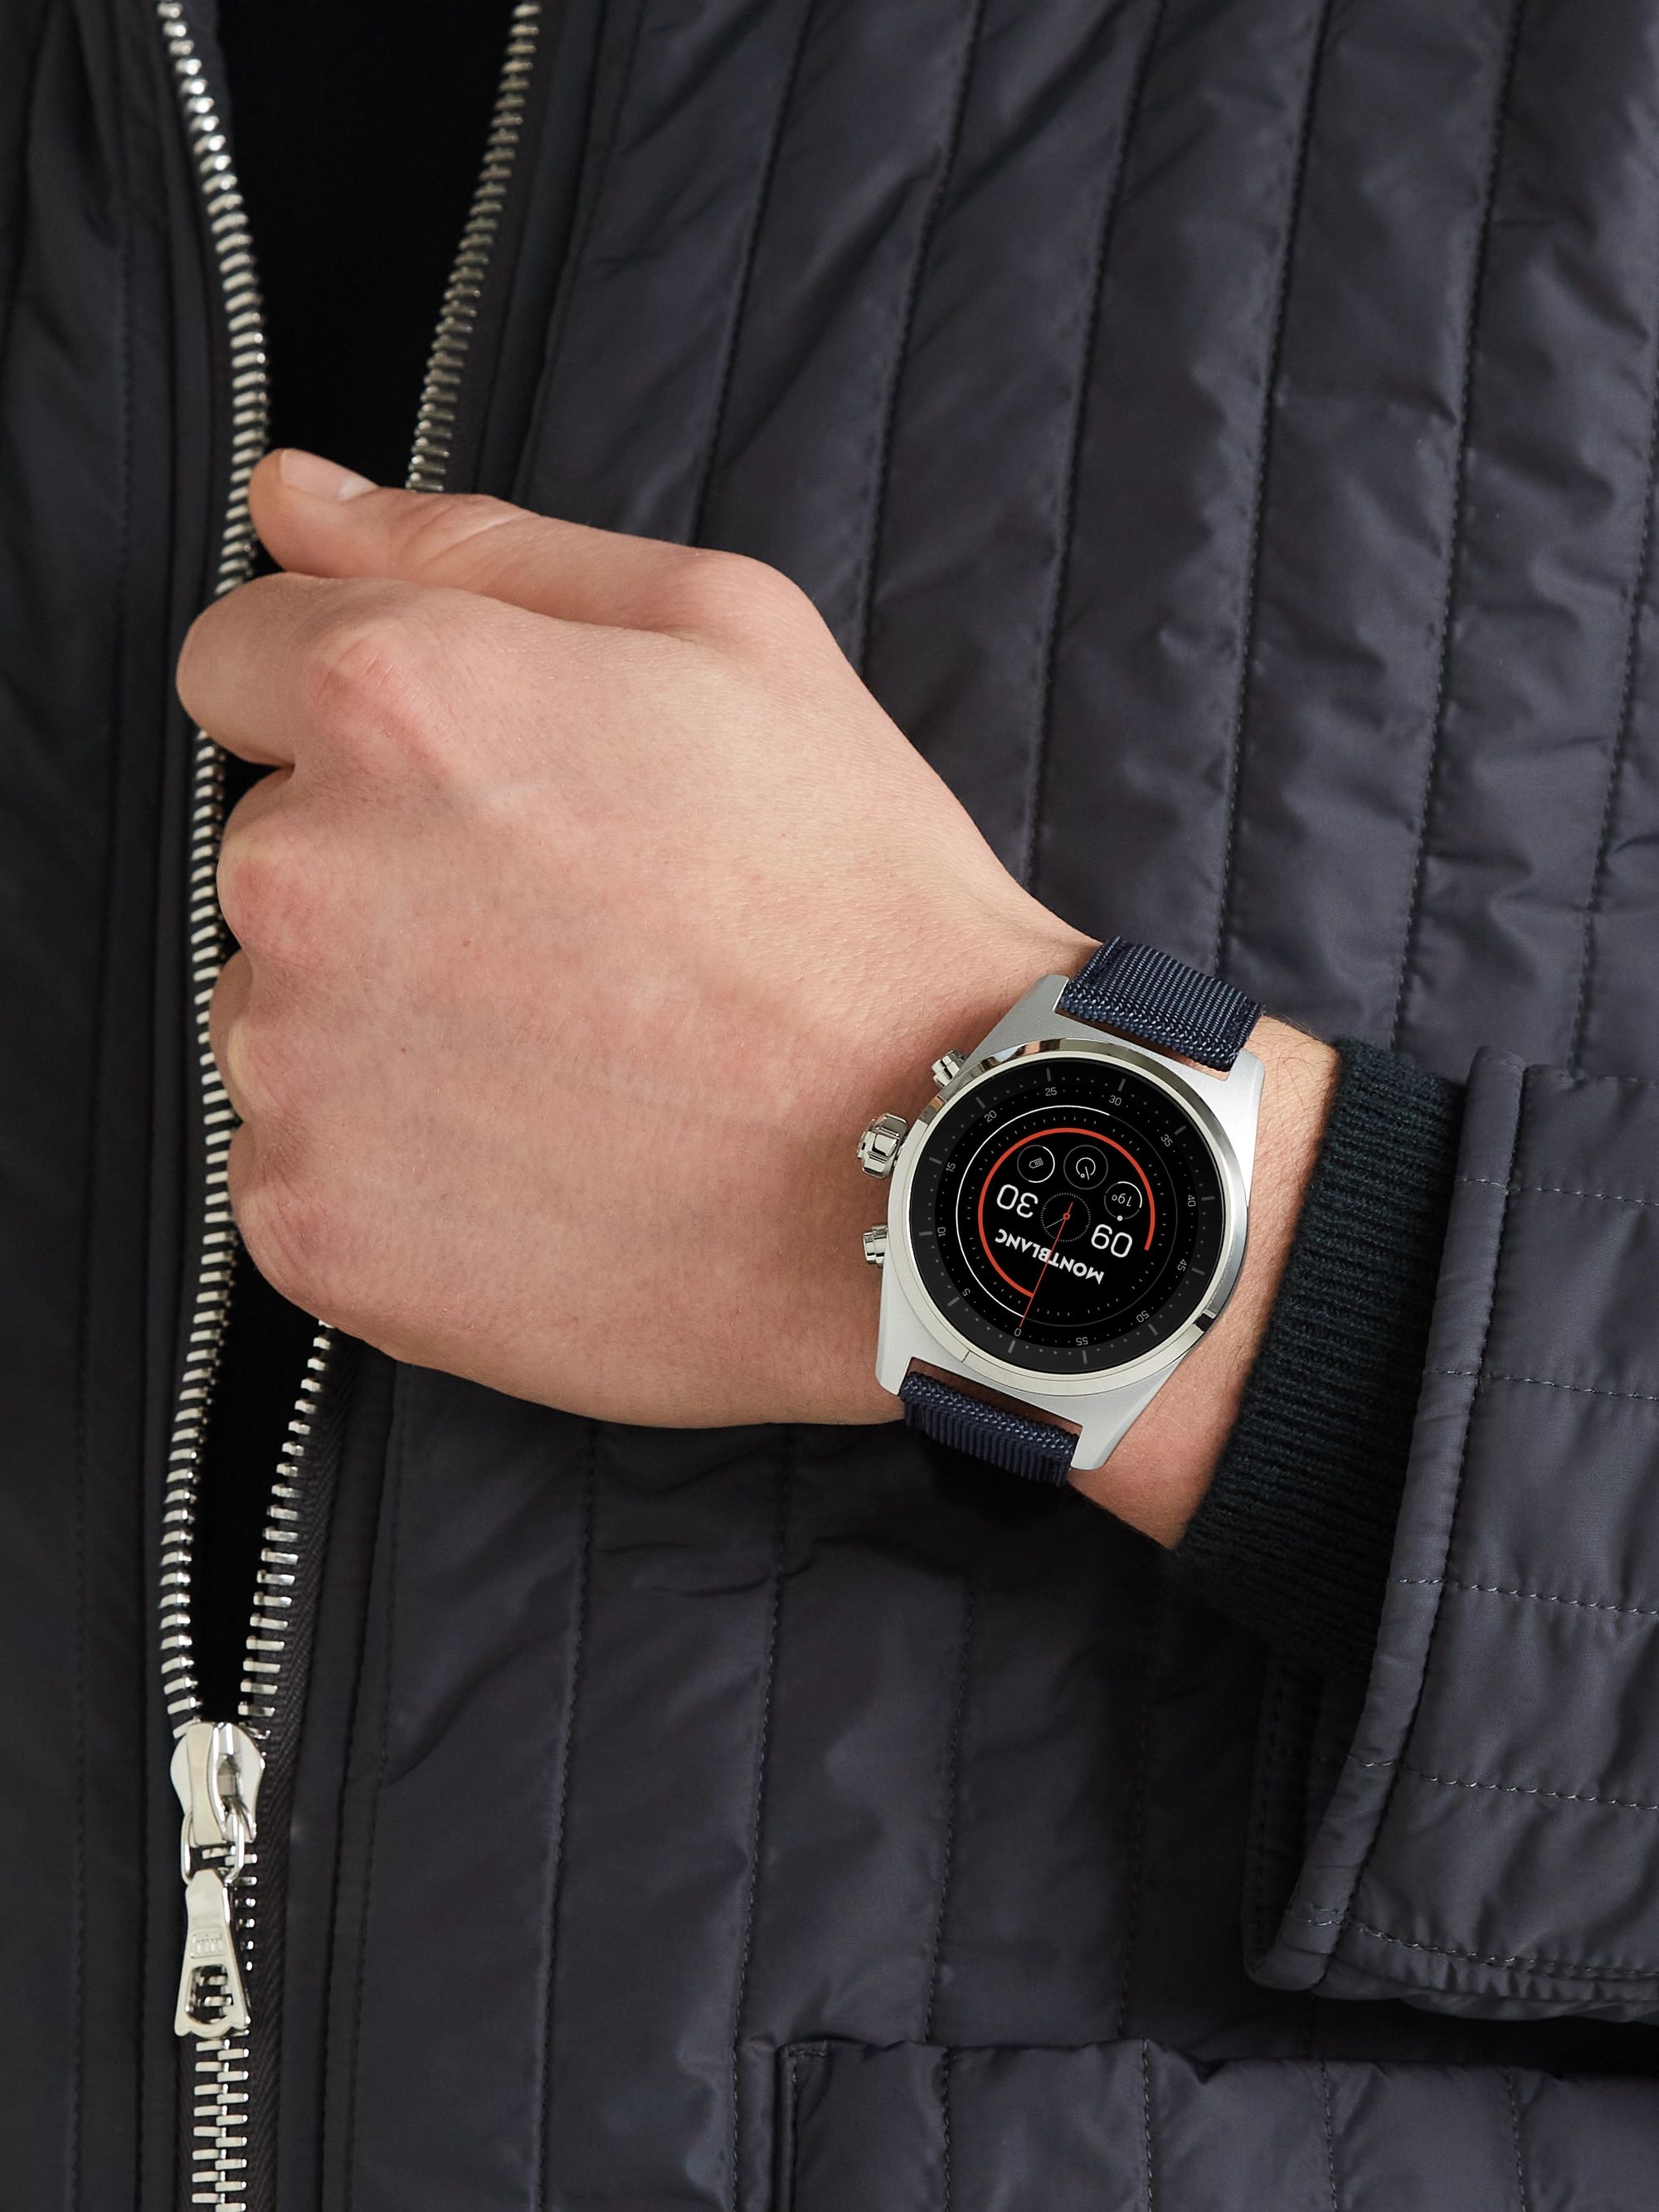 MONTBLANC Summit Lite 43mm Aluminium and Nylon Smart Watch, Ref. No. 128411